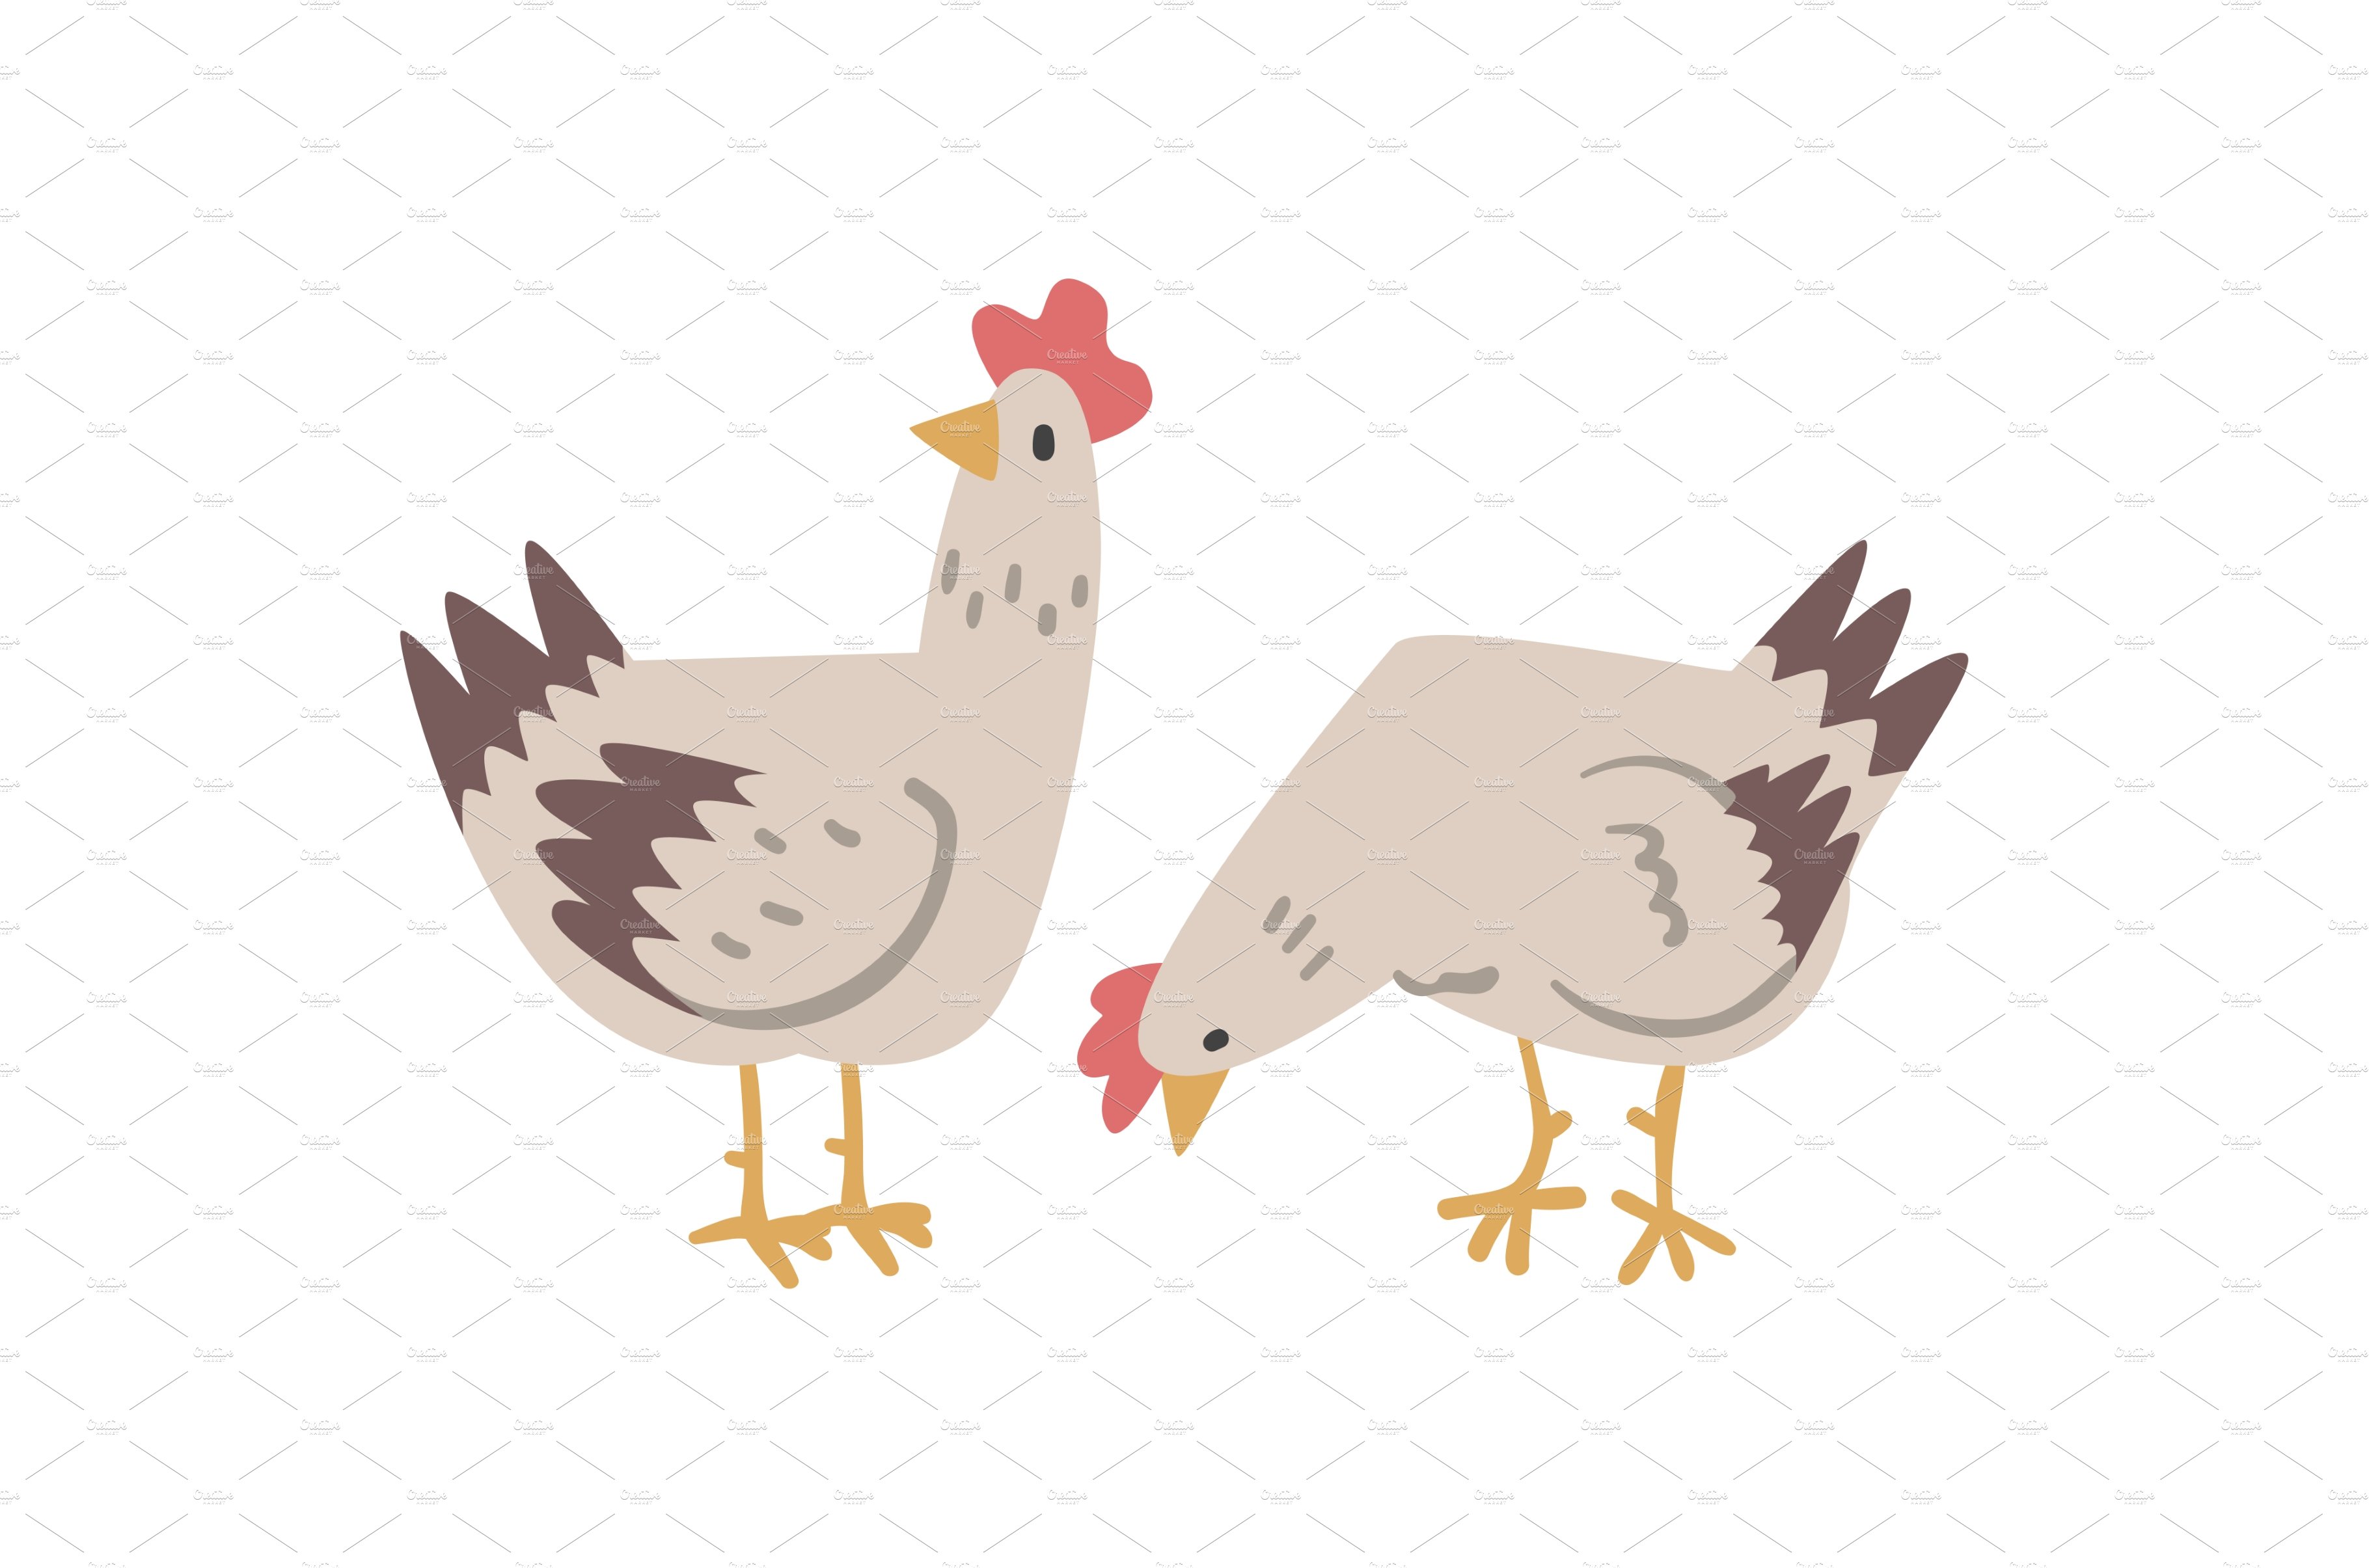 Hens Farm Bird, Poultry Breeding cover image.